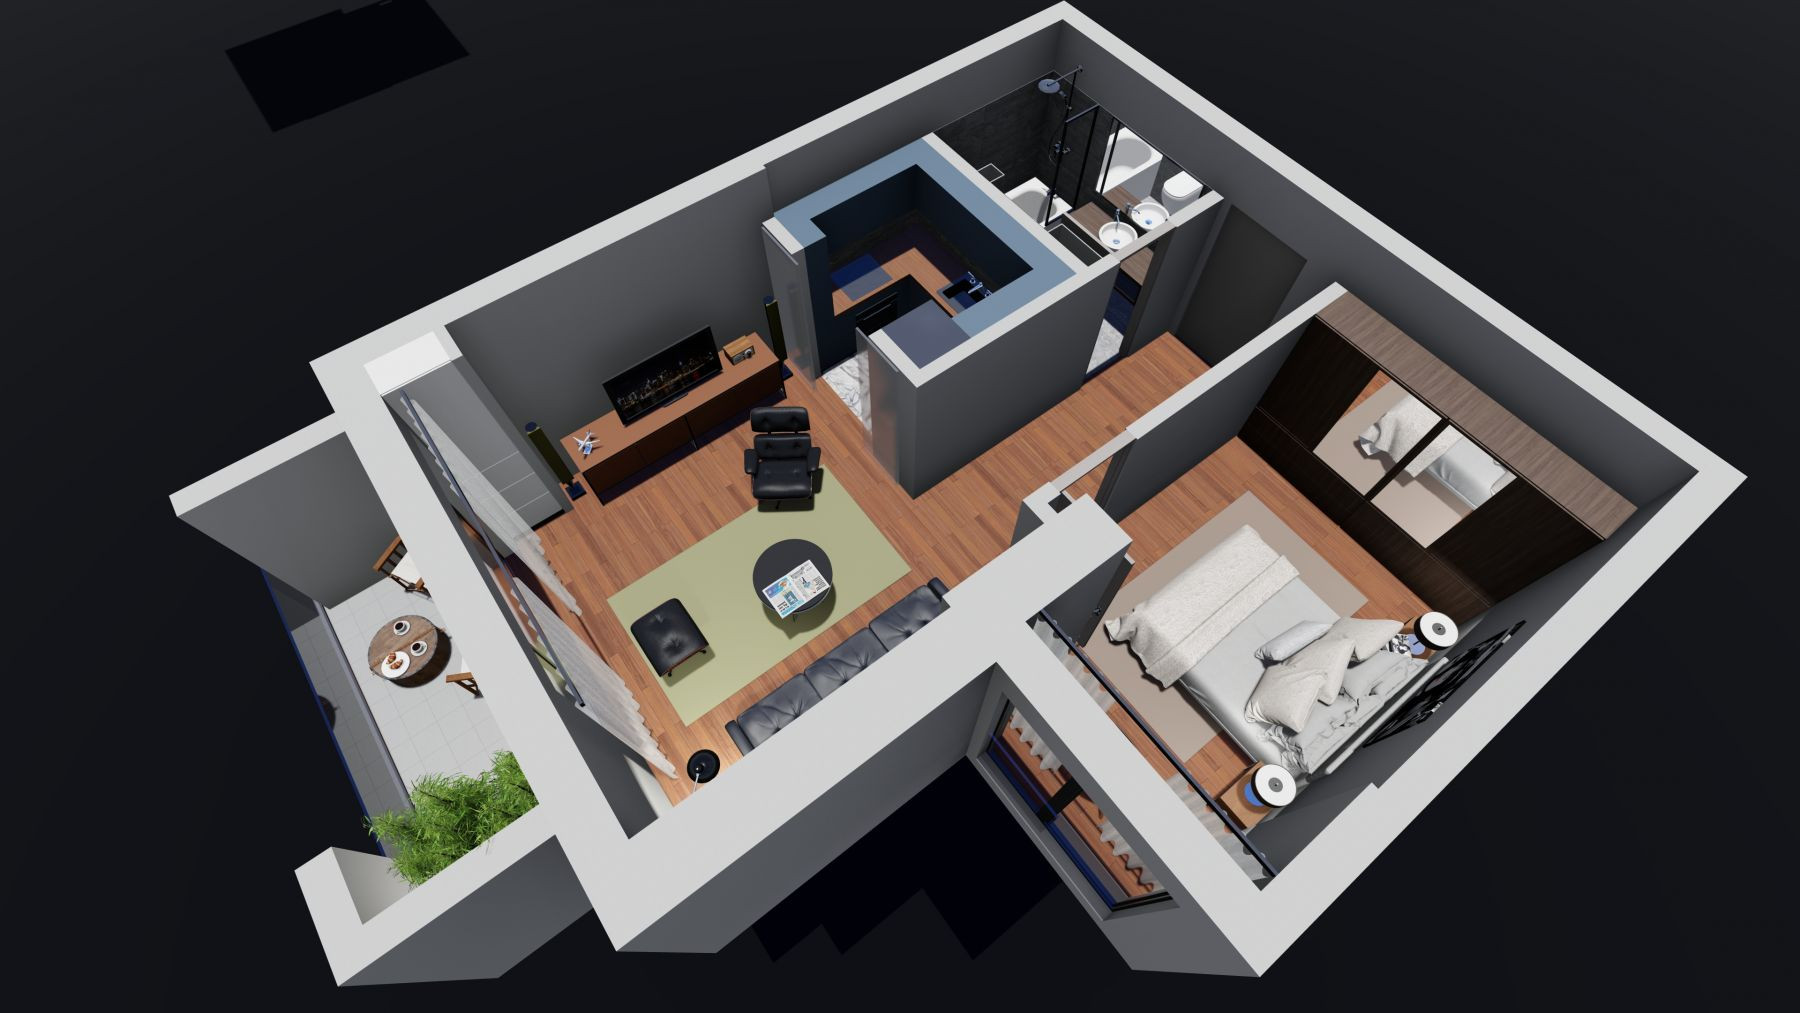 Apartamente - Str Justitiei 57 - Smart Home Compartimentari Inteligente  5